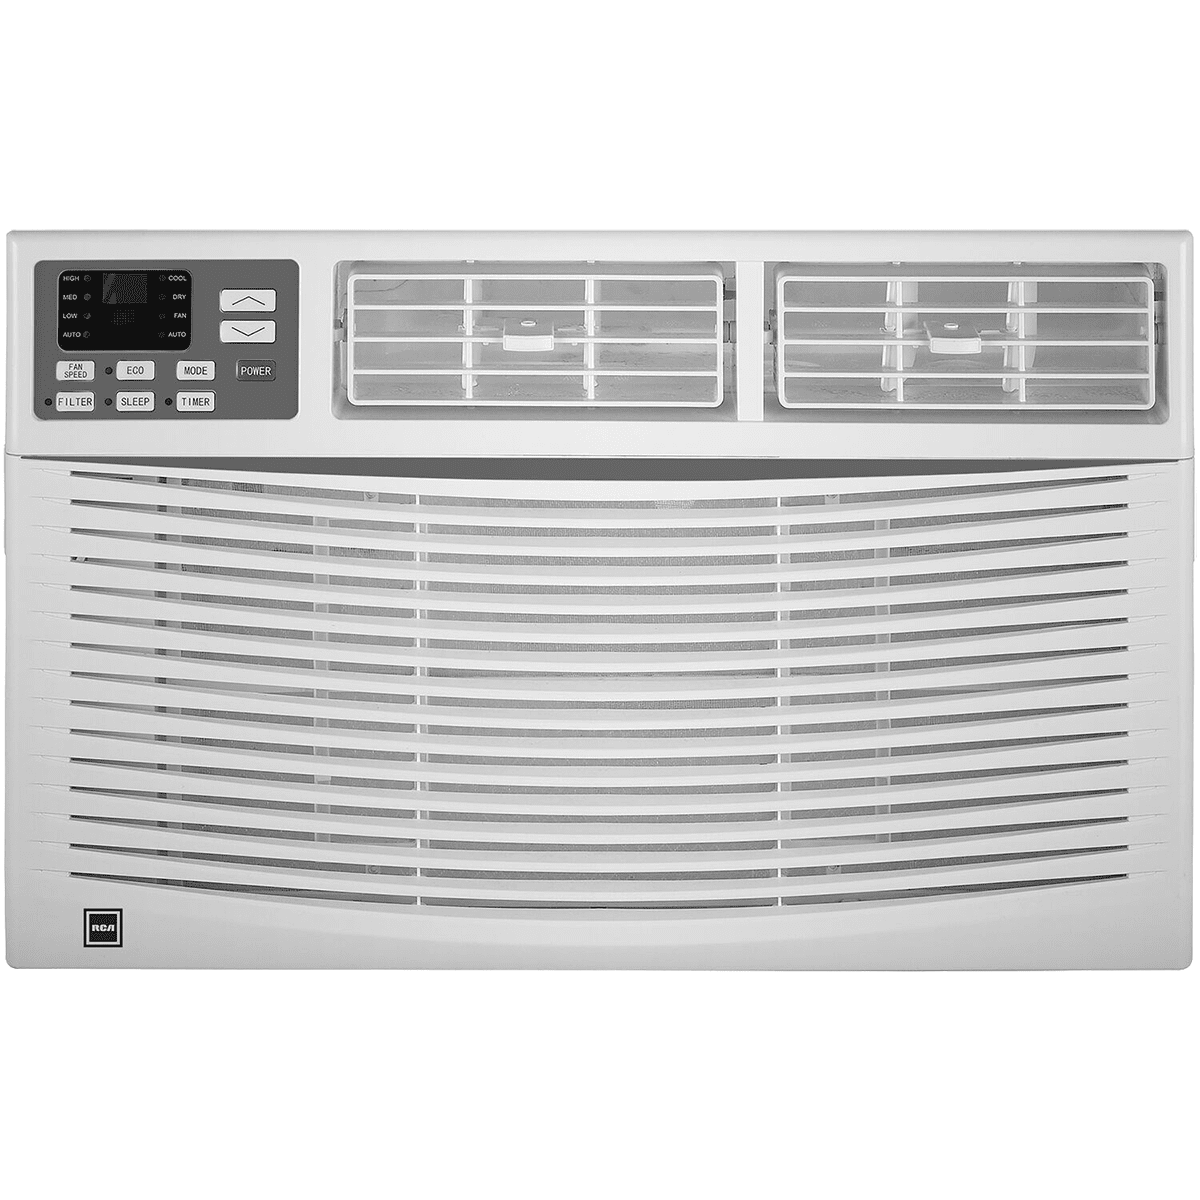 rca-12-000-btu-window-air-conditioner-at-shoppersbest